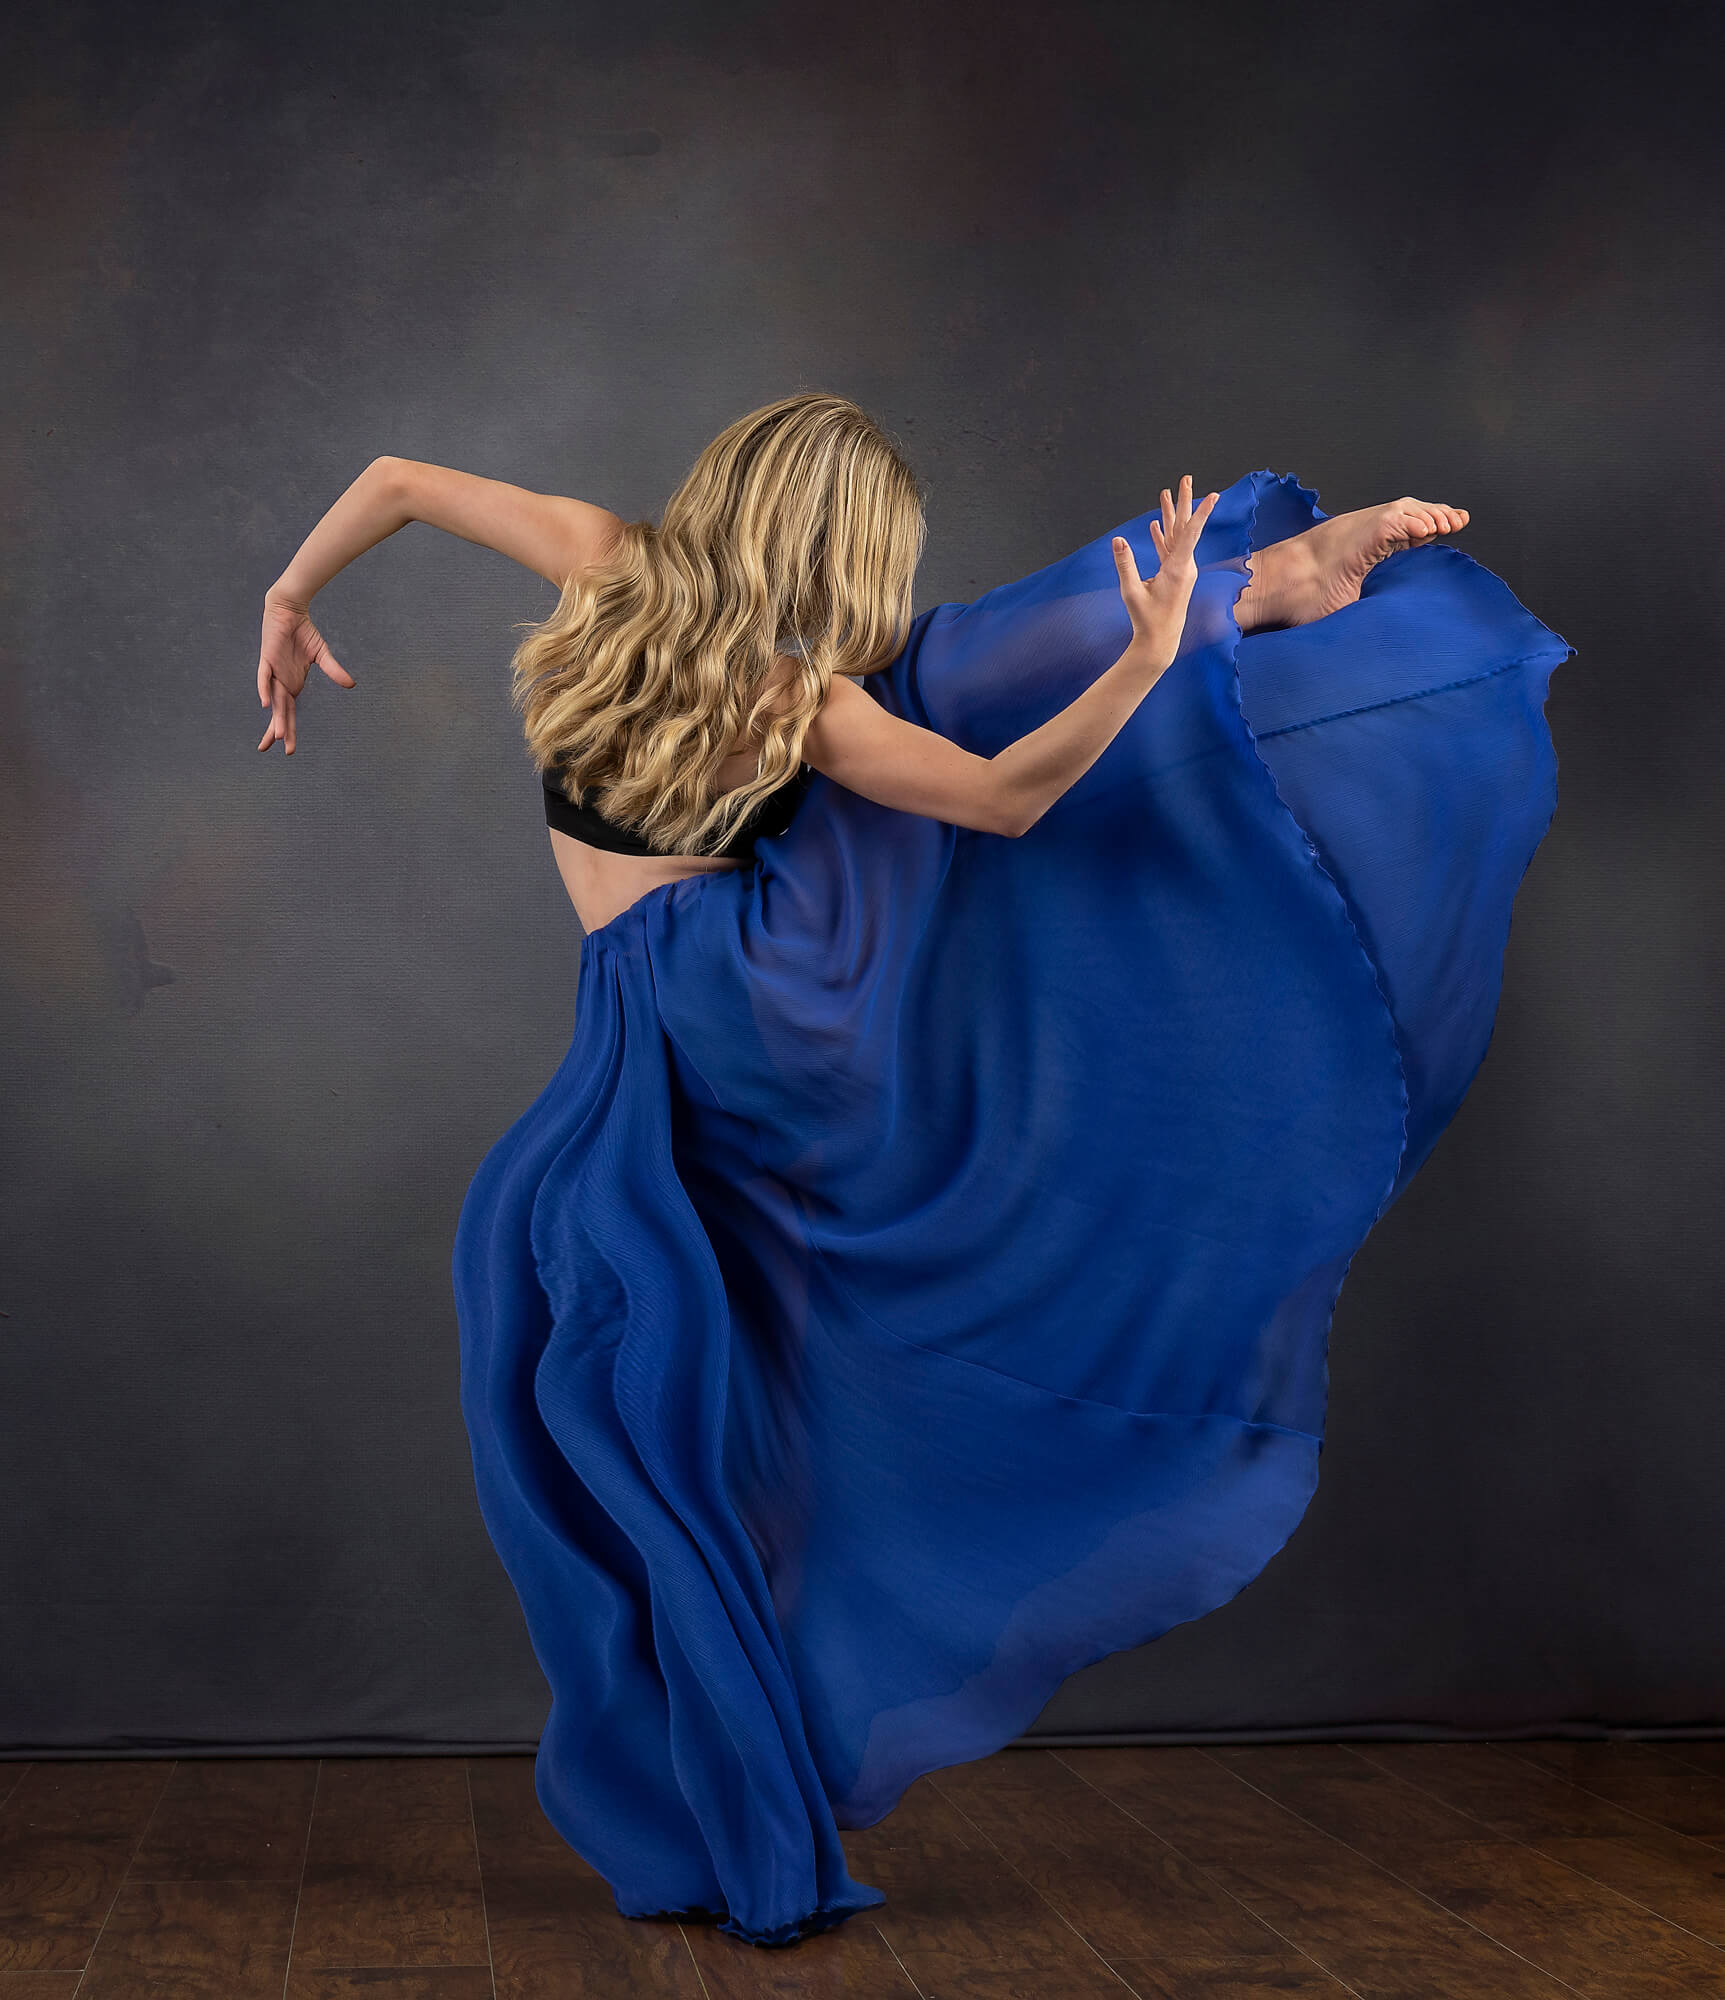 Palos Verdes HS dancer in blue skirt